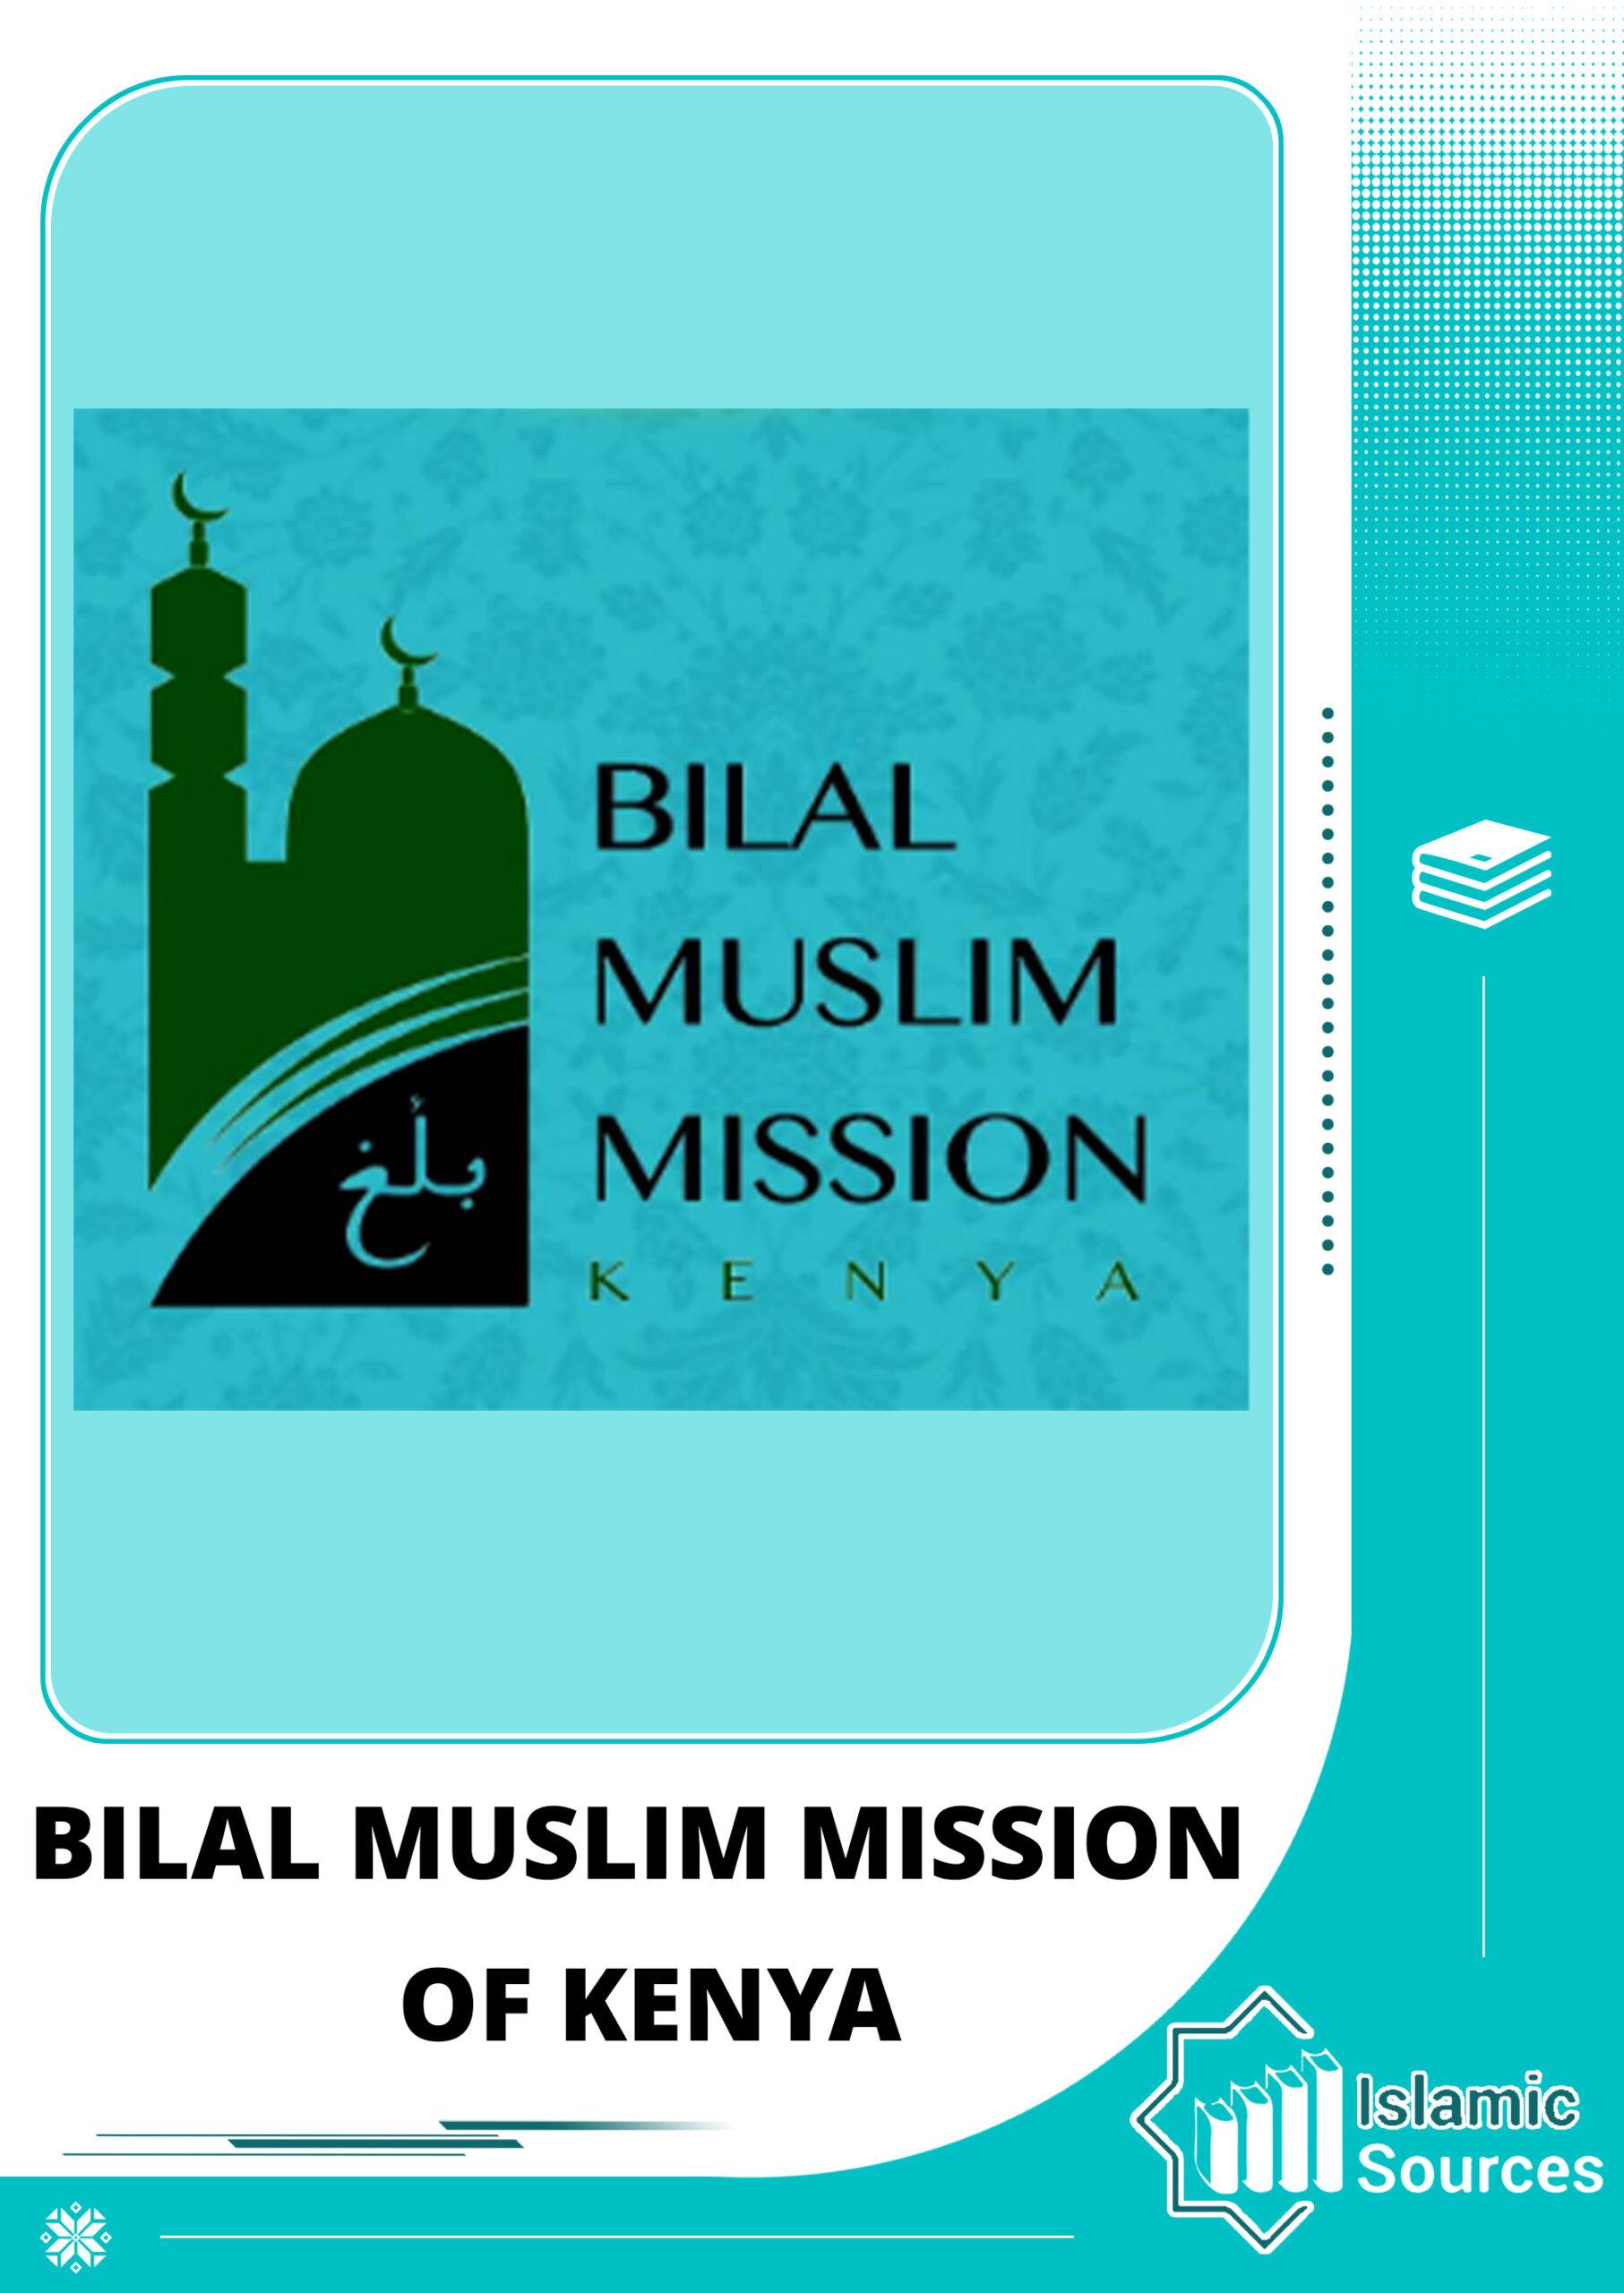 Bilal Muslim Mission of KENYA